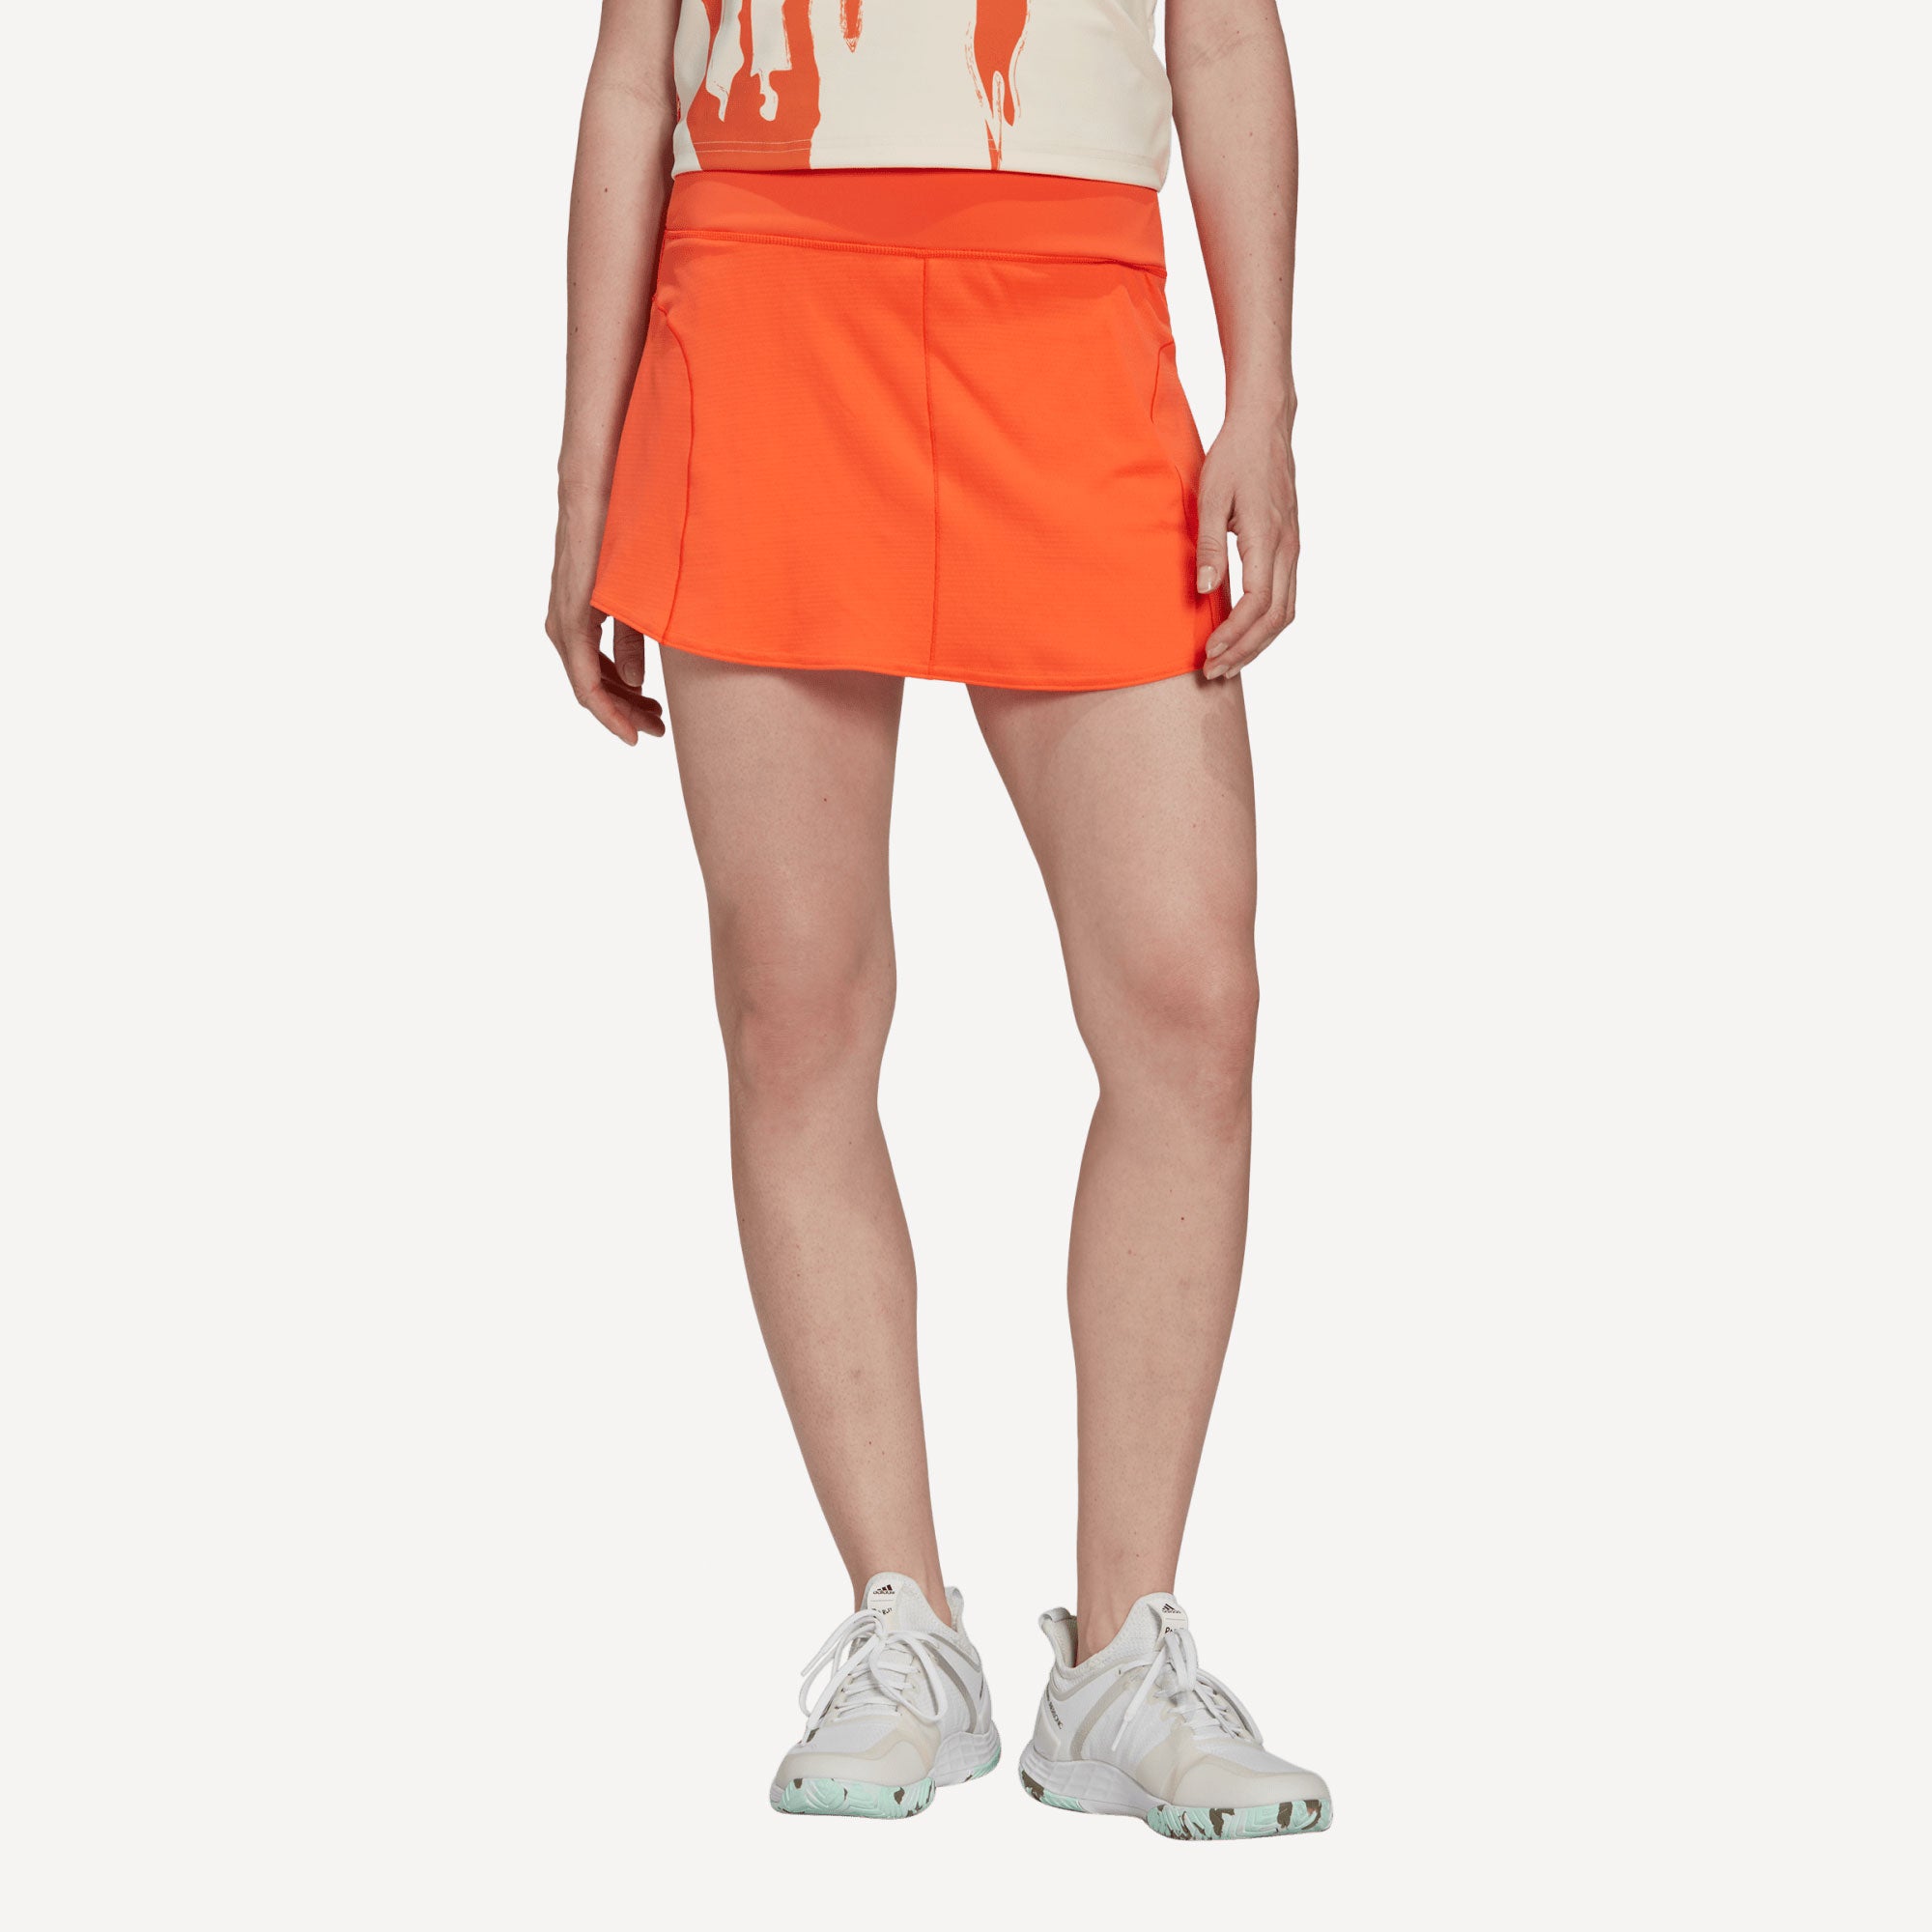 adidas Match Women's Tennis Skirt Orange (1)